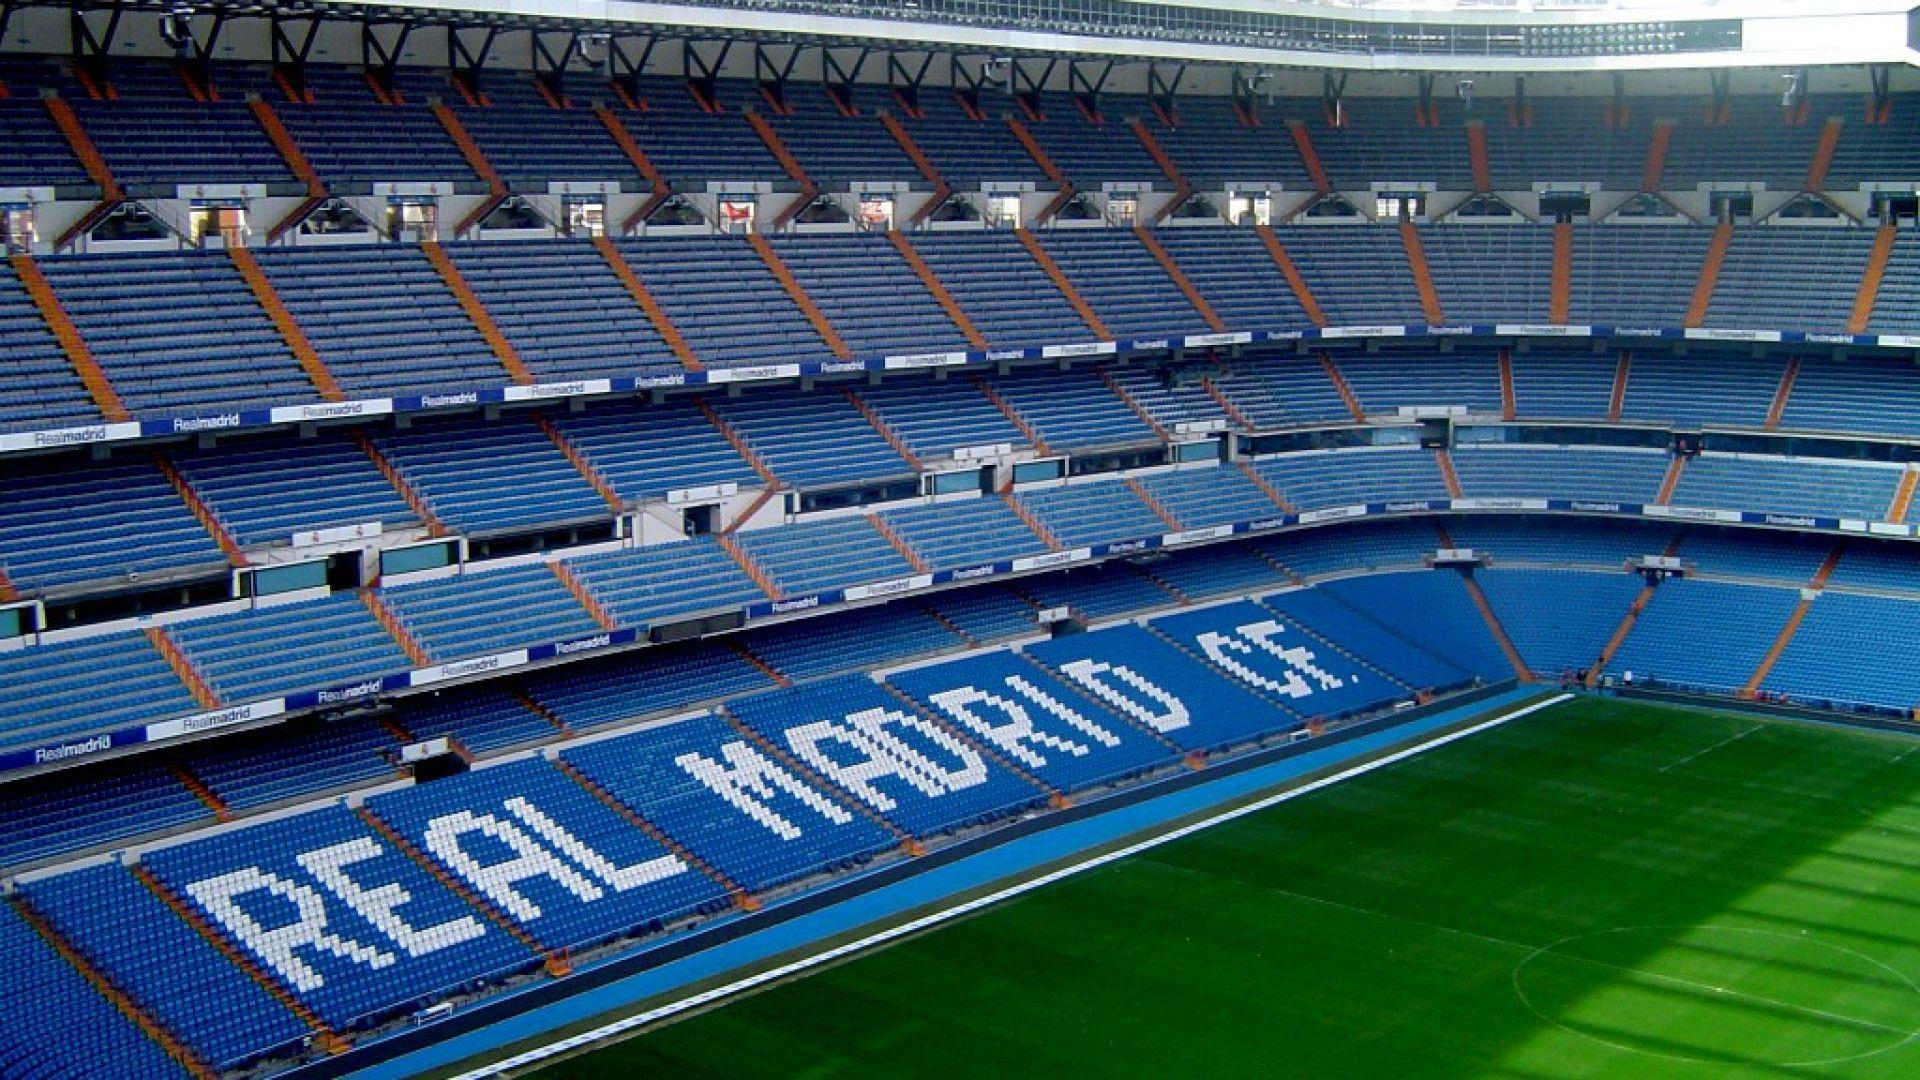 Real Madrid Santiago Bernabeu stadium wallpapers | PixelsTalk.Net